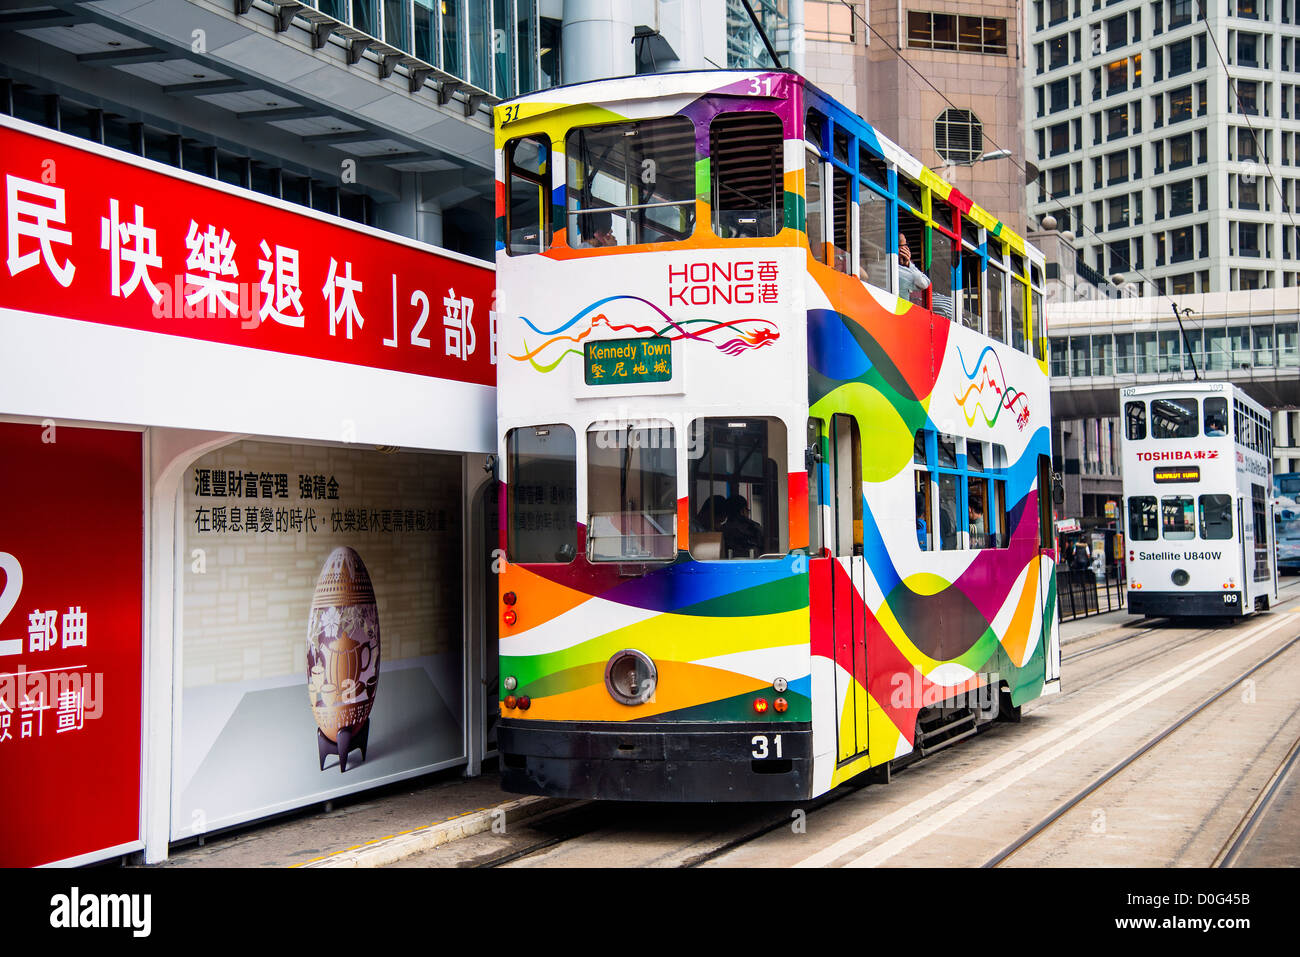 Hong Kong double decker colorés au tramway Queensway, Hong Kong, Chine Banque D'Images